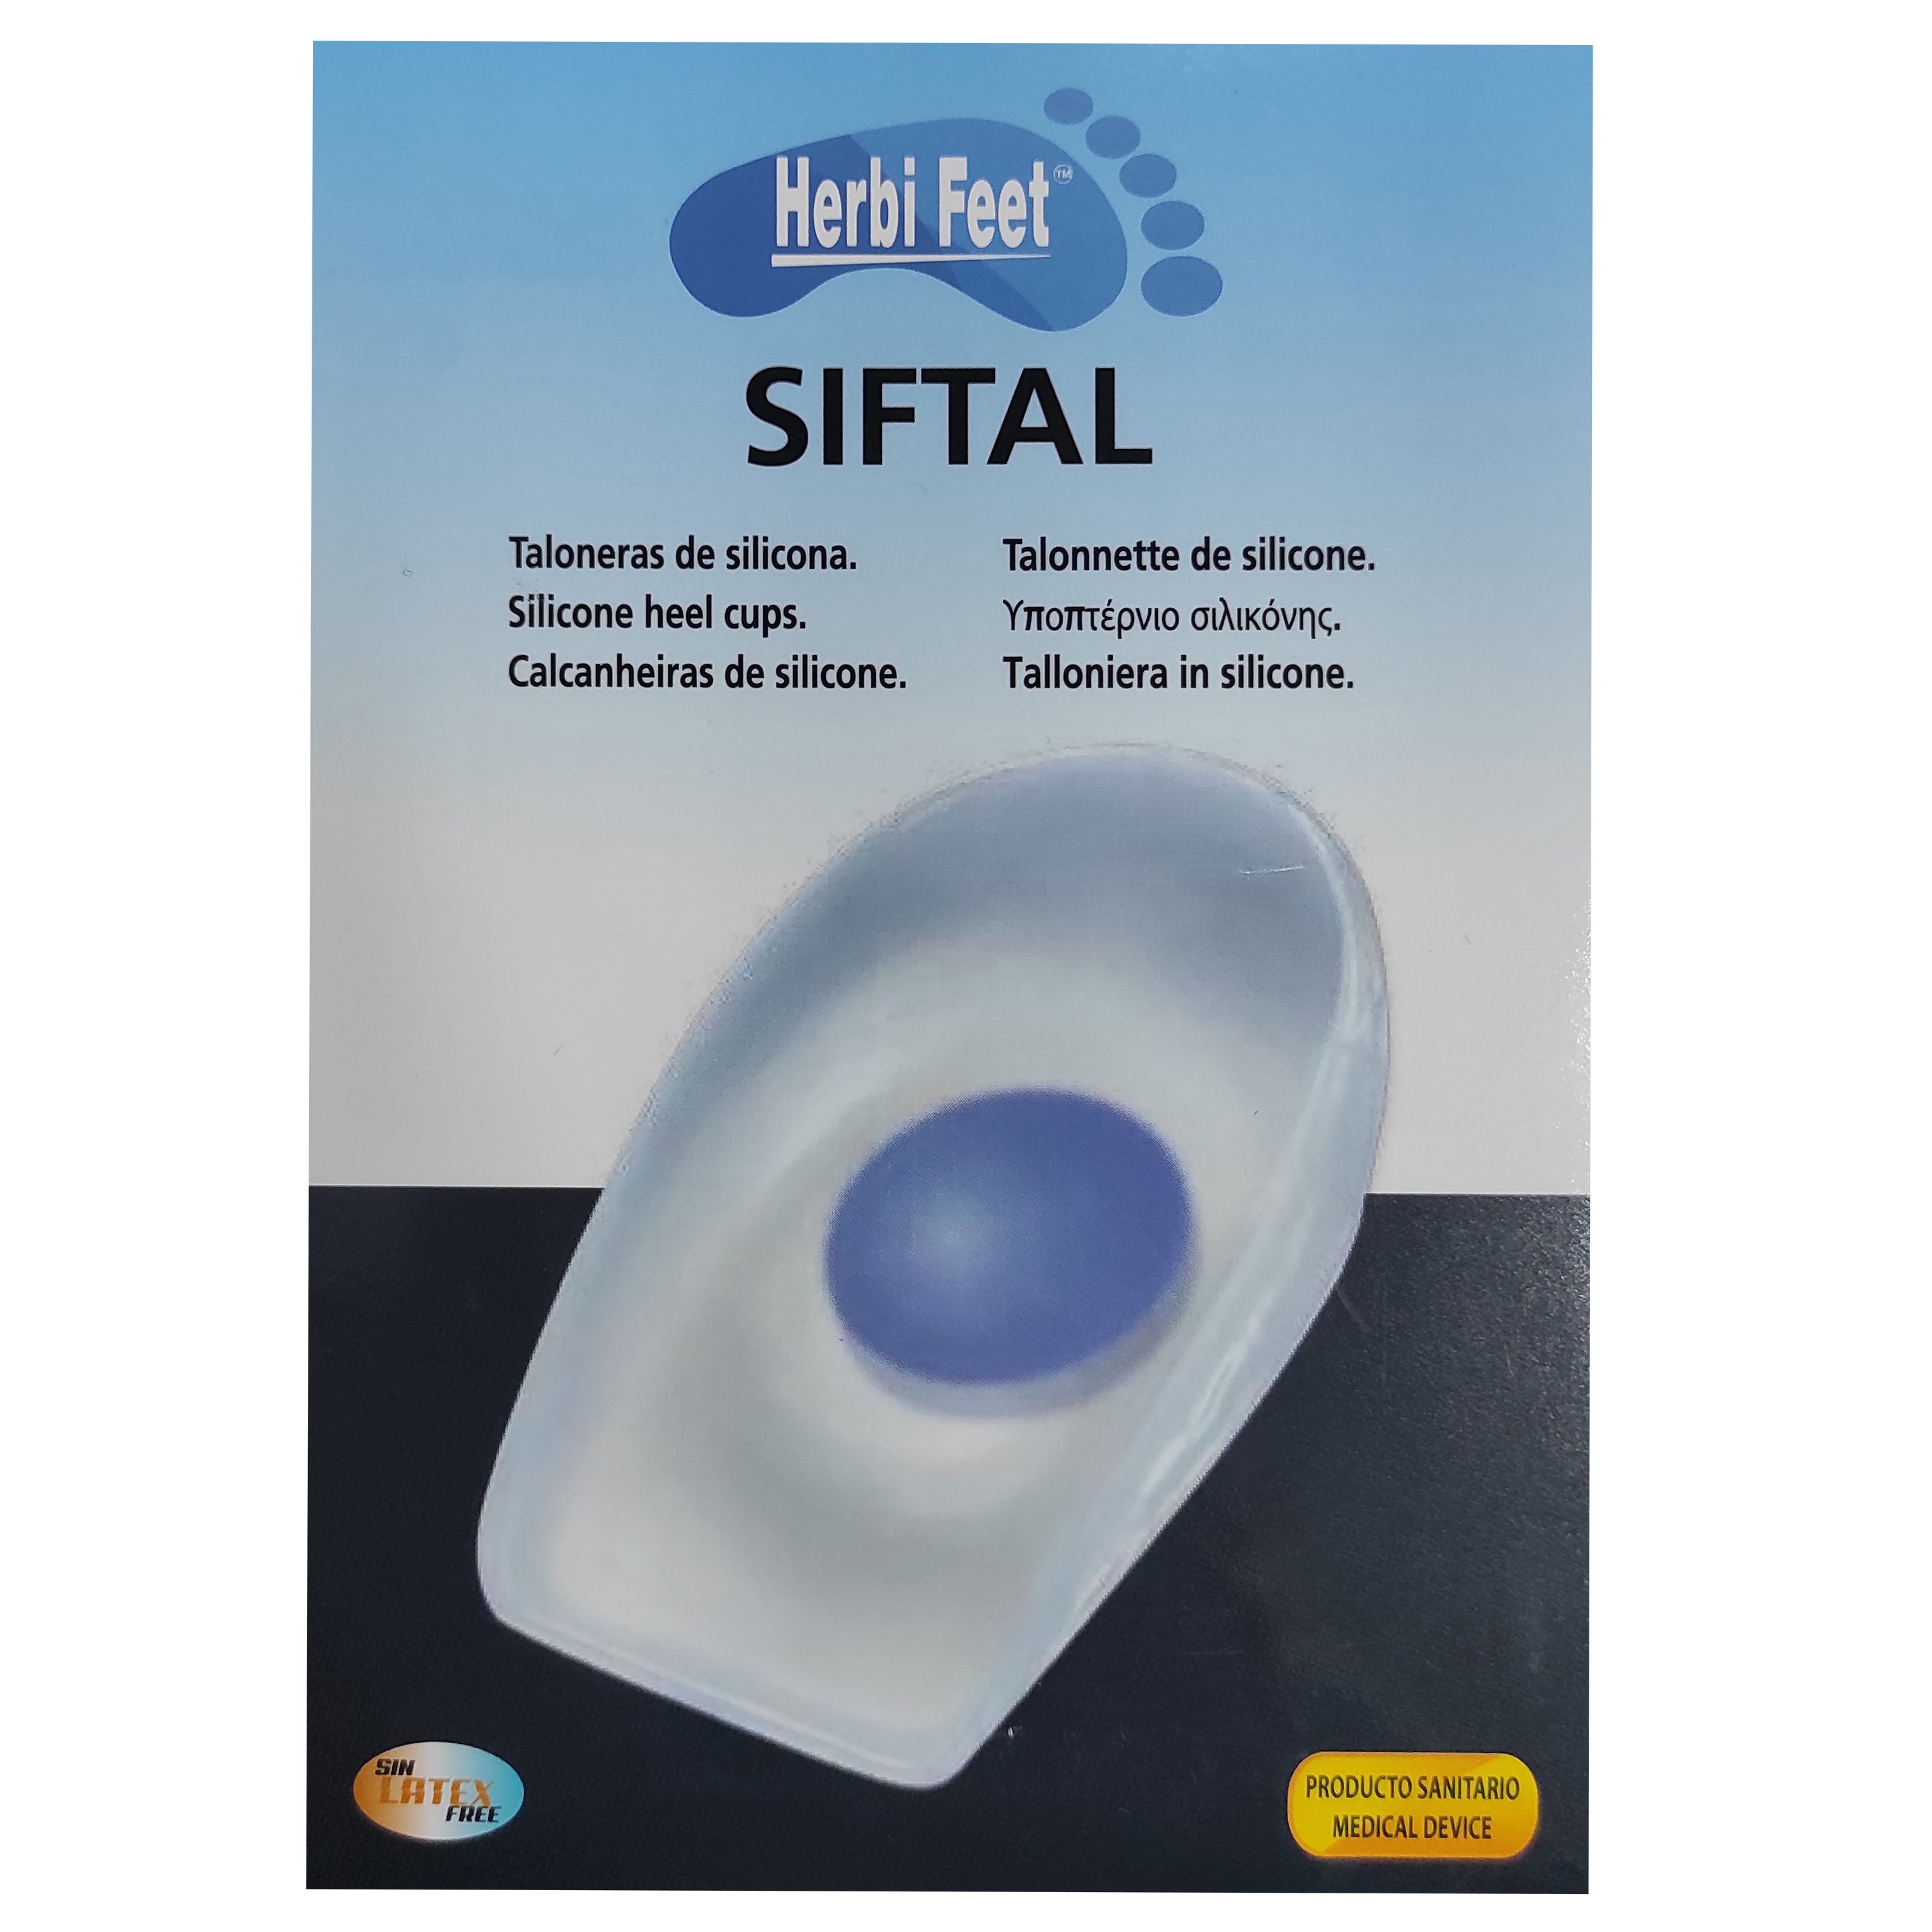 Herbi Feet Herbi Feet Silicone Siftal Υποπτέρνιο Σιλικόνης 2 Τεμάχια - Medium